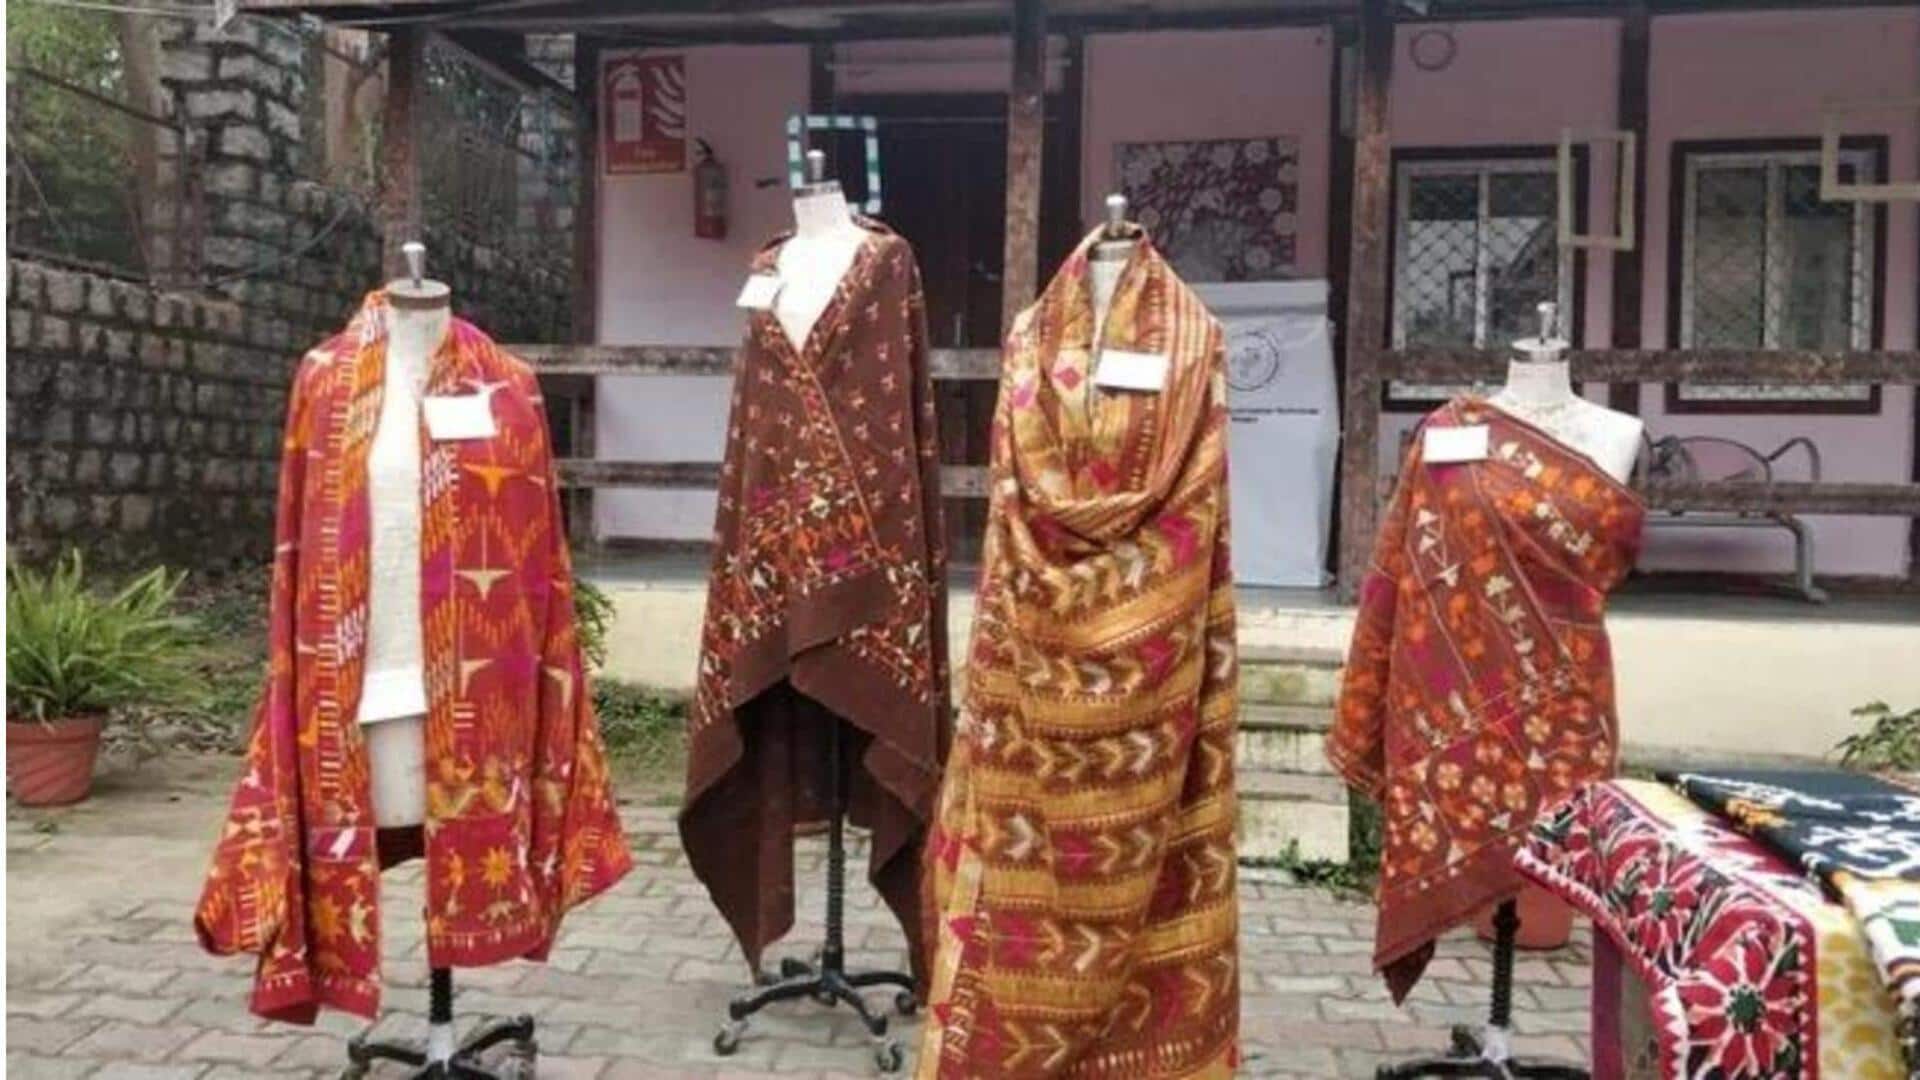 Mendaur ulang tekstil pusaka untuk fesyen yang berkelanjutan